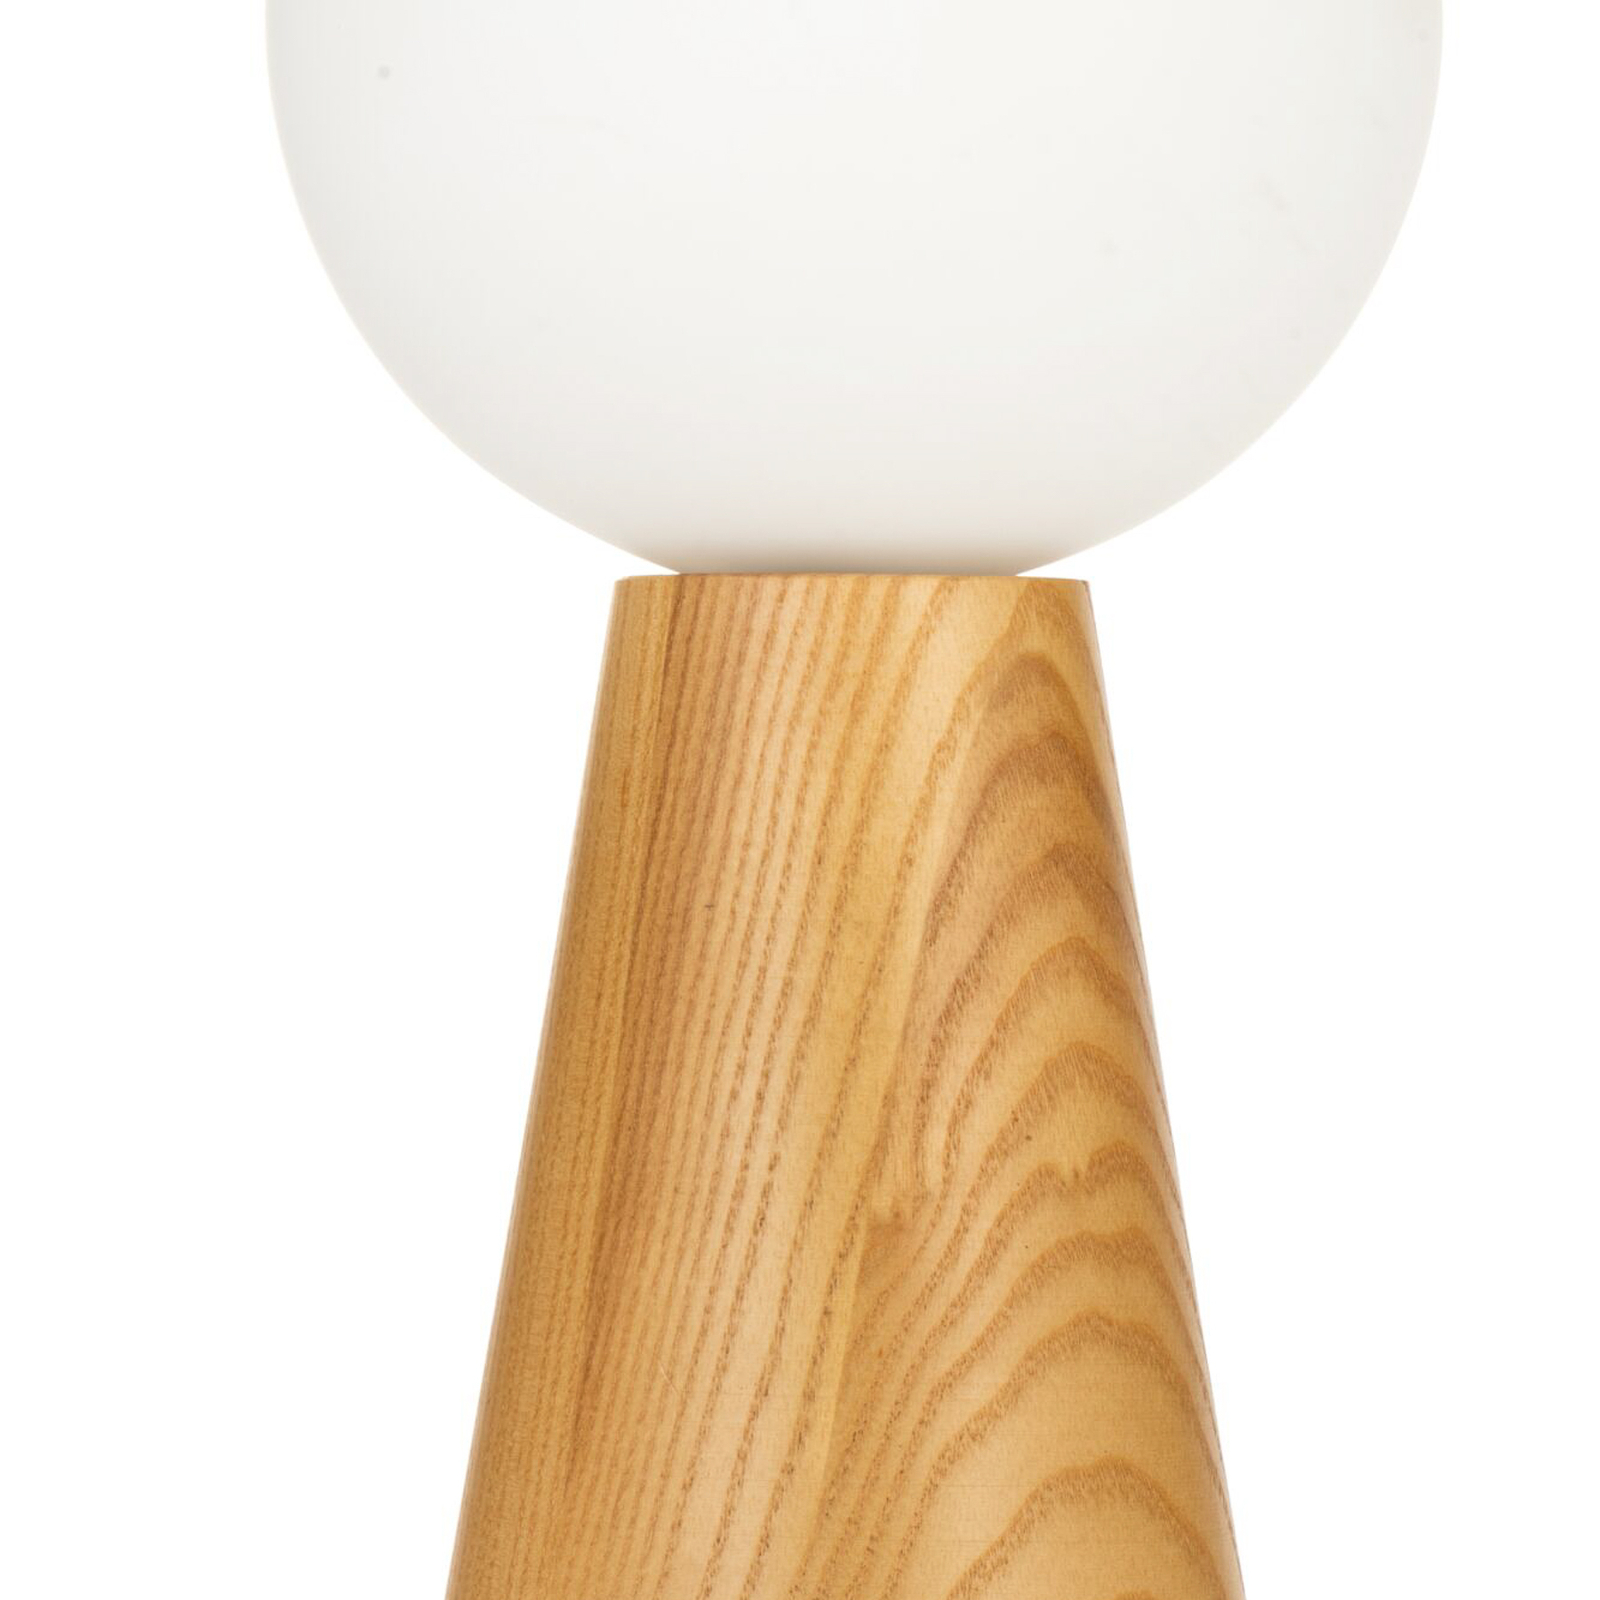 Pauleen Woody Soul bordslampa, träfot, glaskula